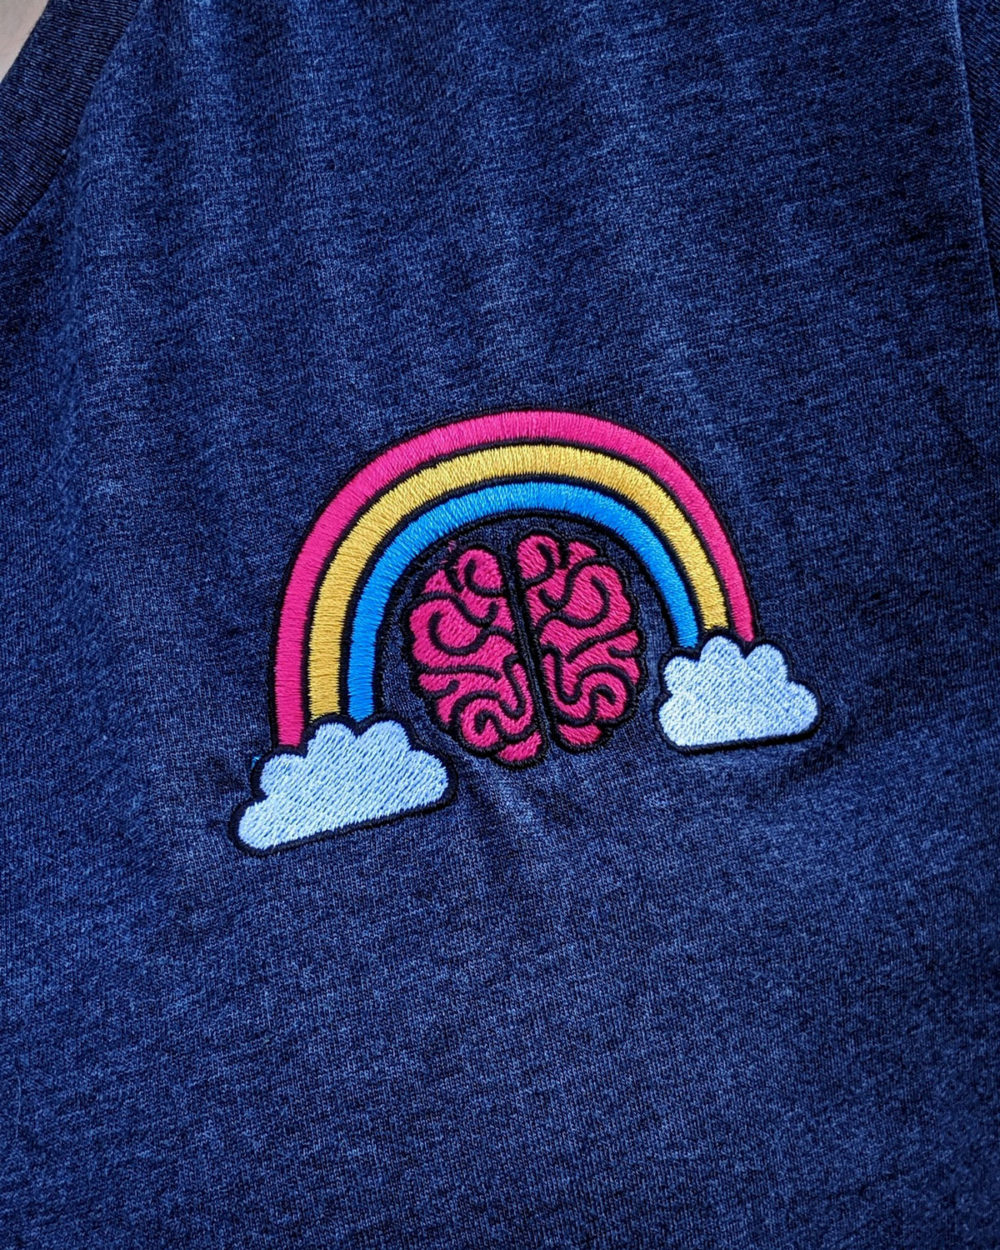 embroidered rainbow brains shirt